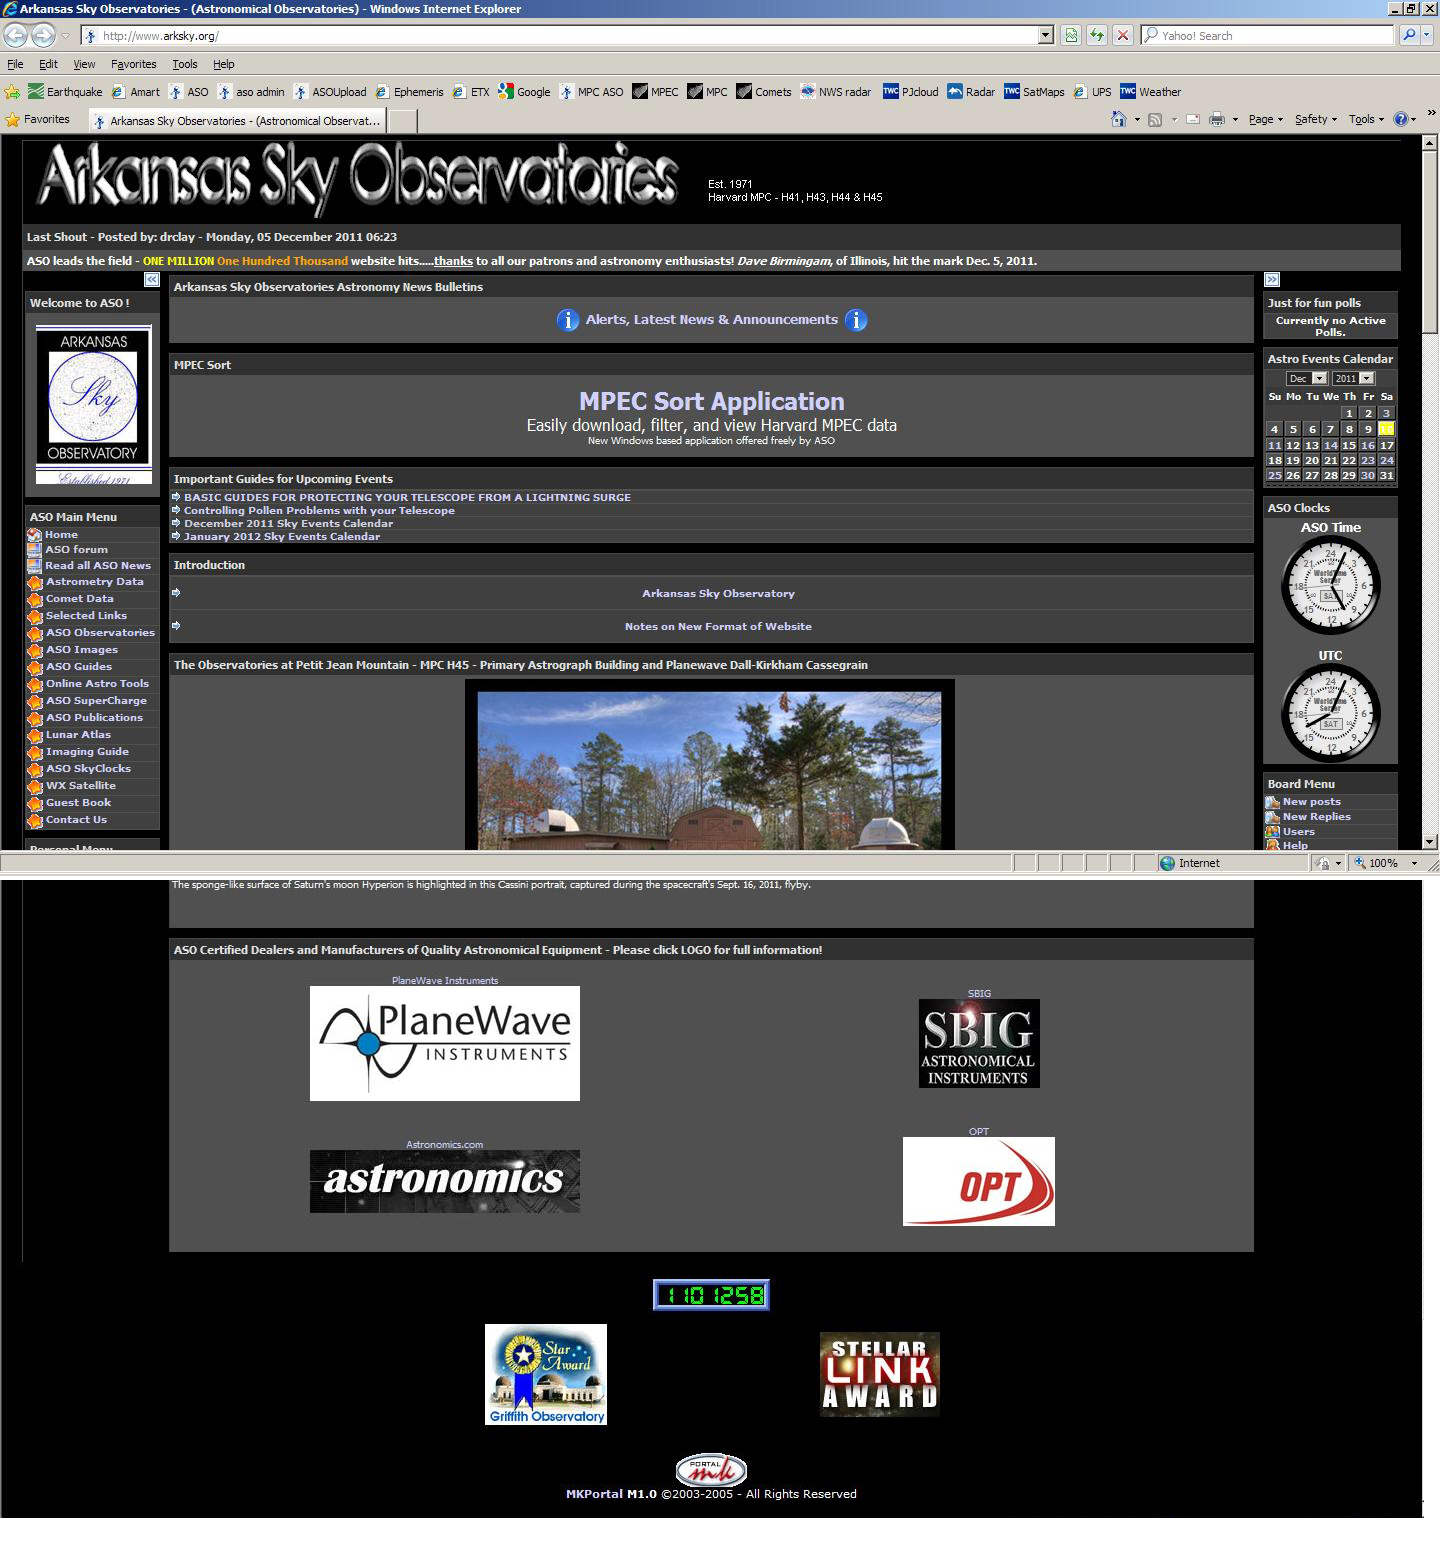 ASO home page composite